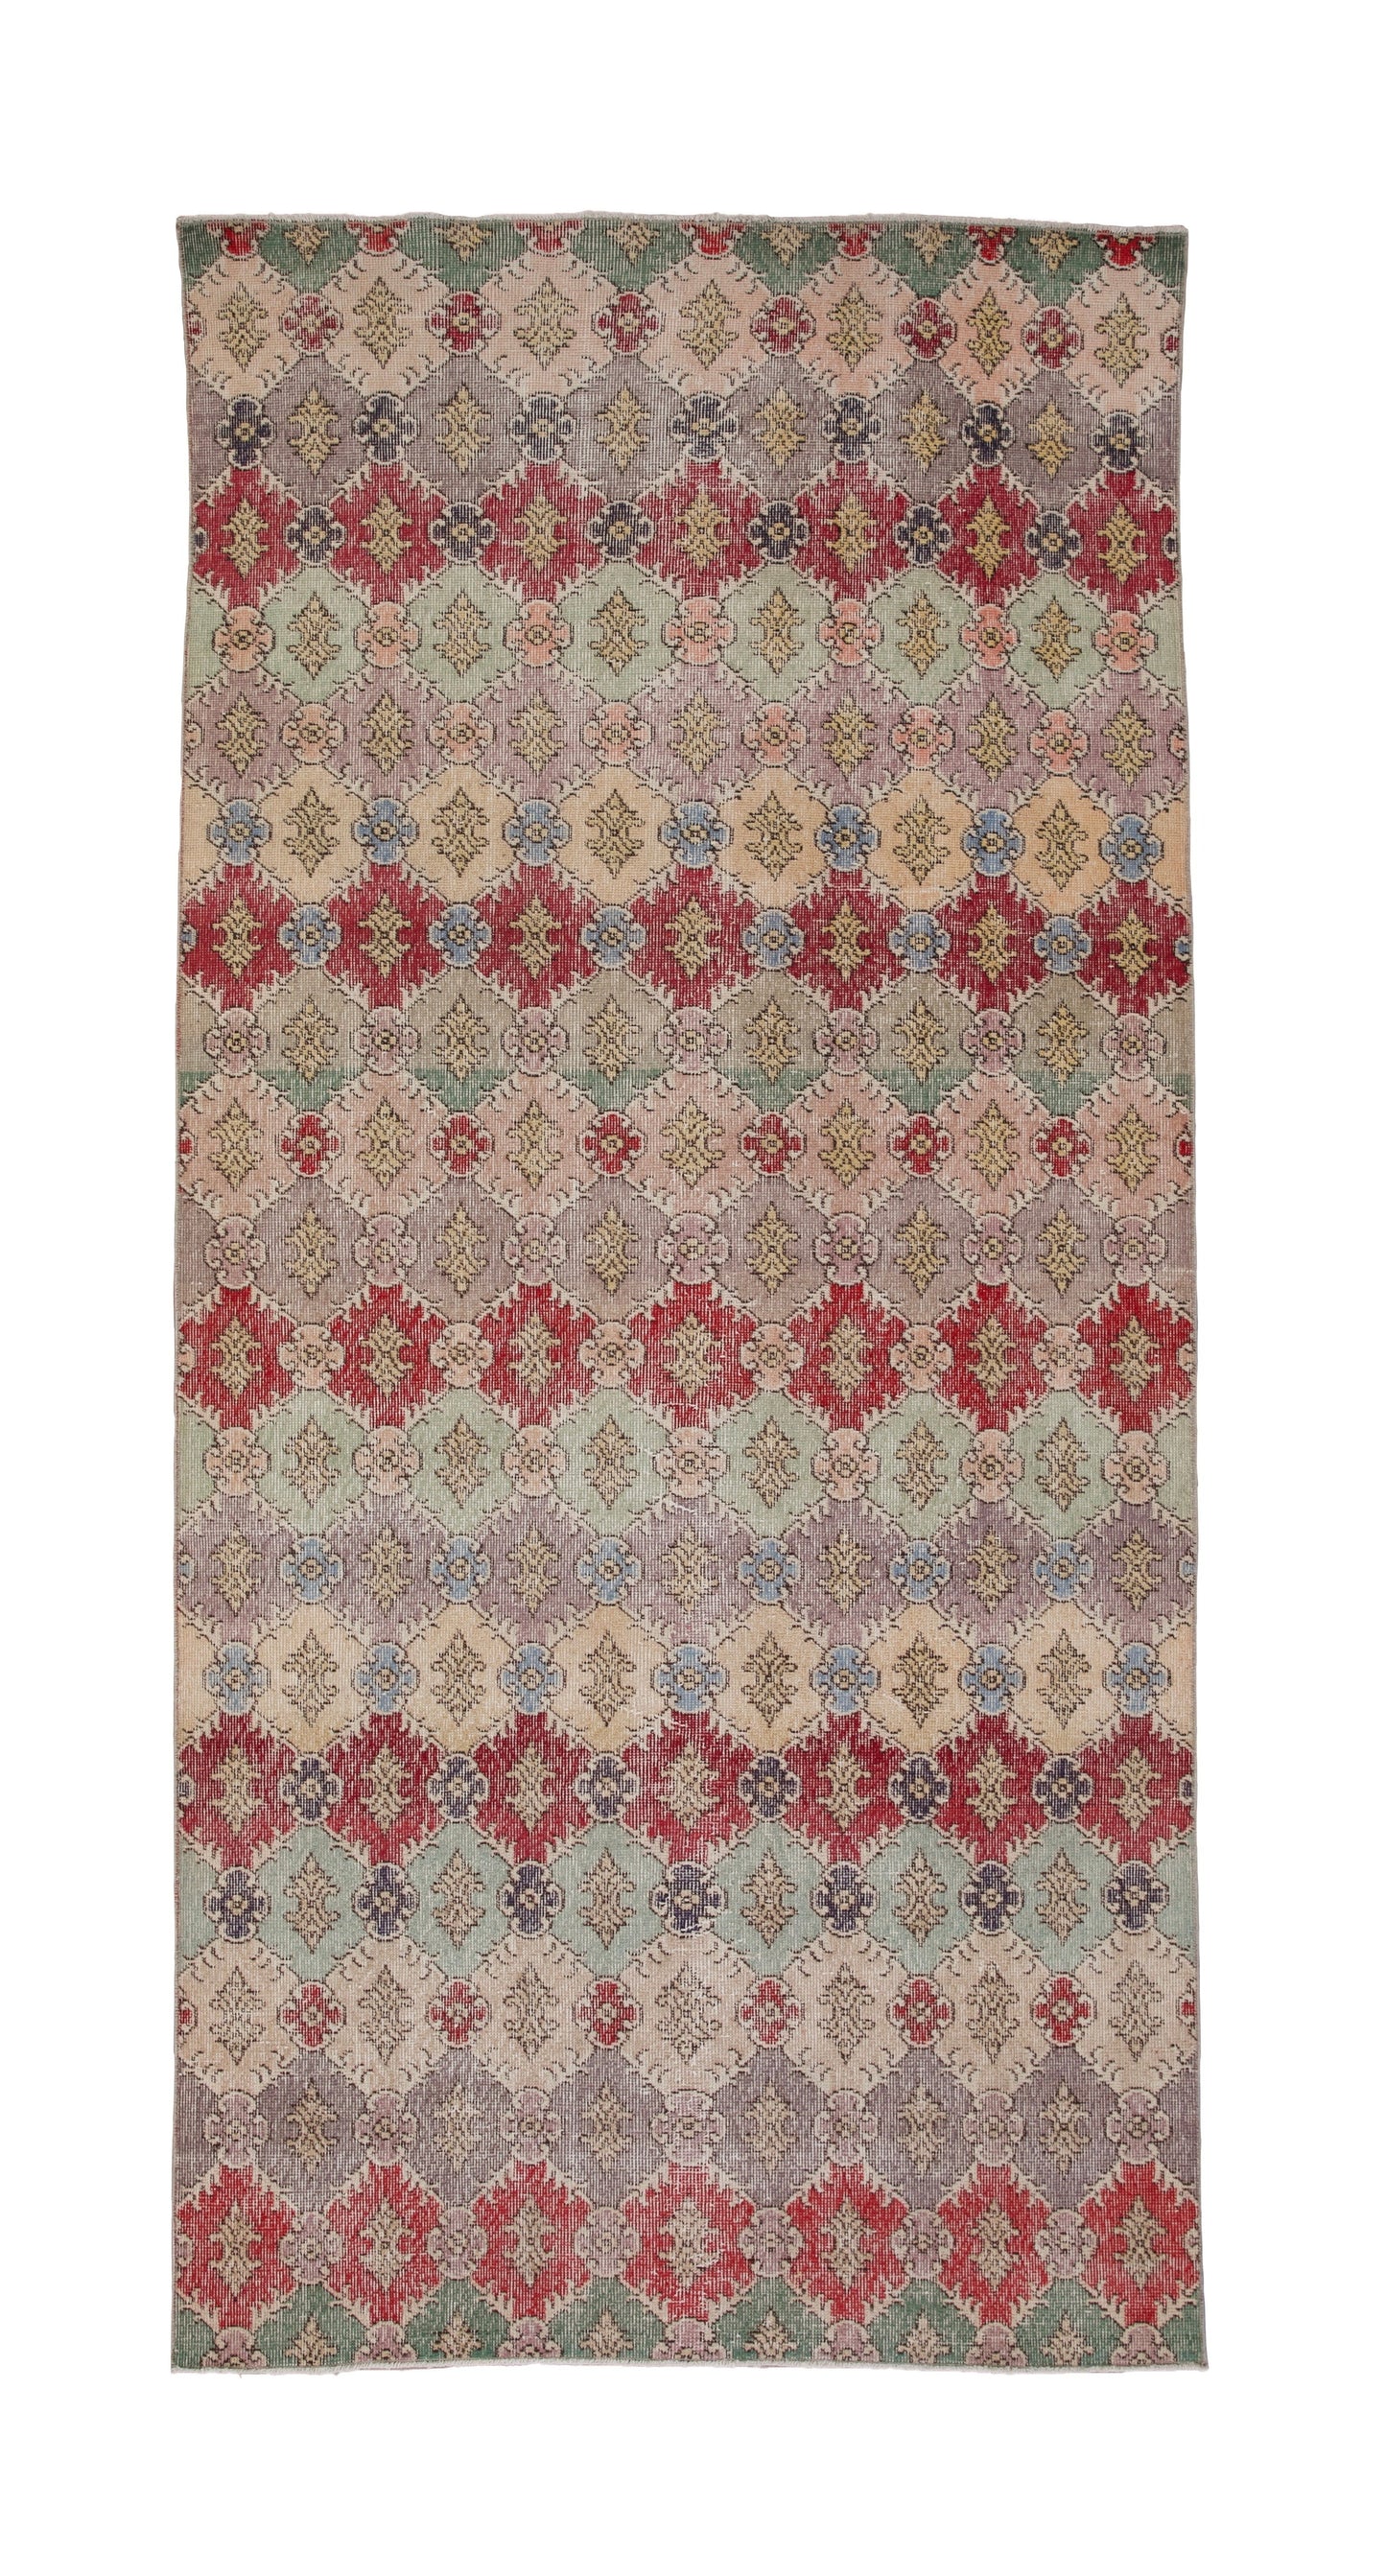 Fine Unique Handmade Wool Runner Carpet product image #27872192757930